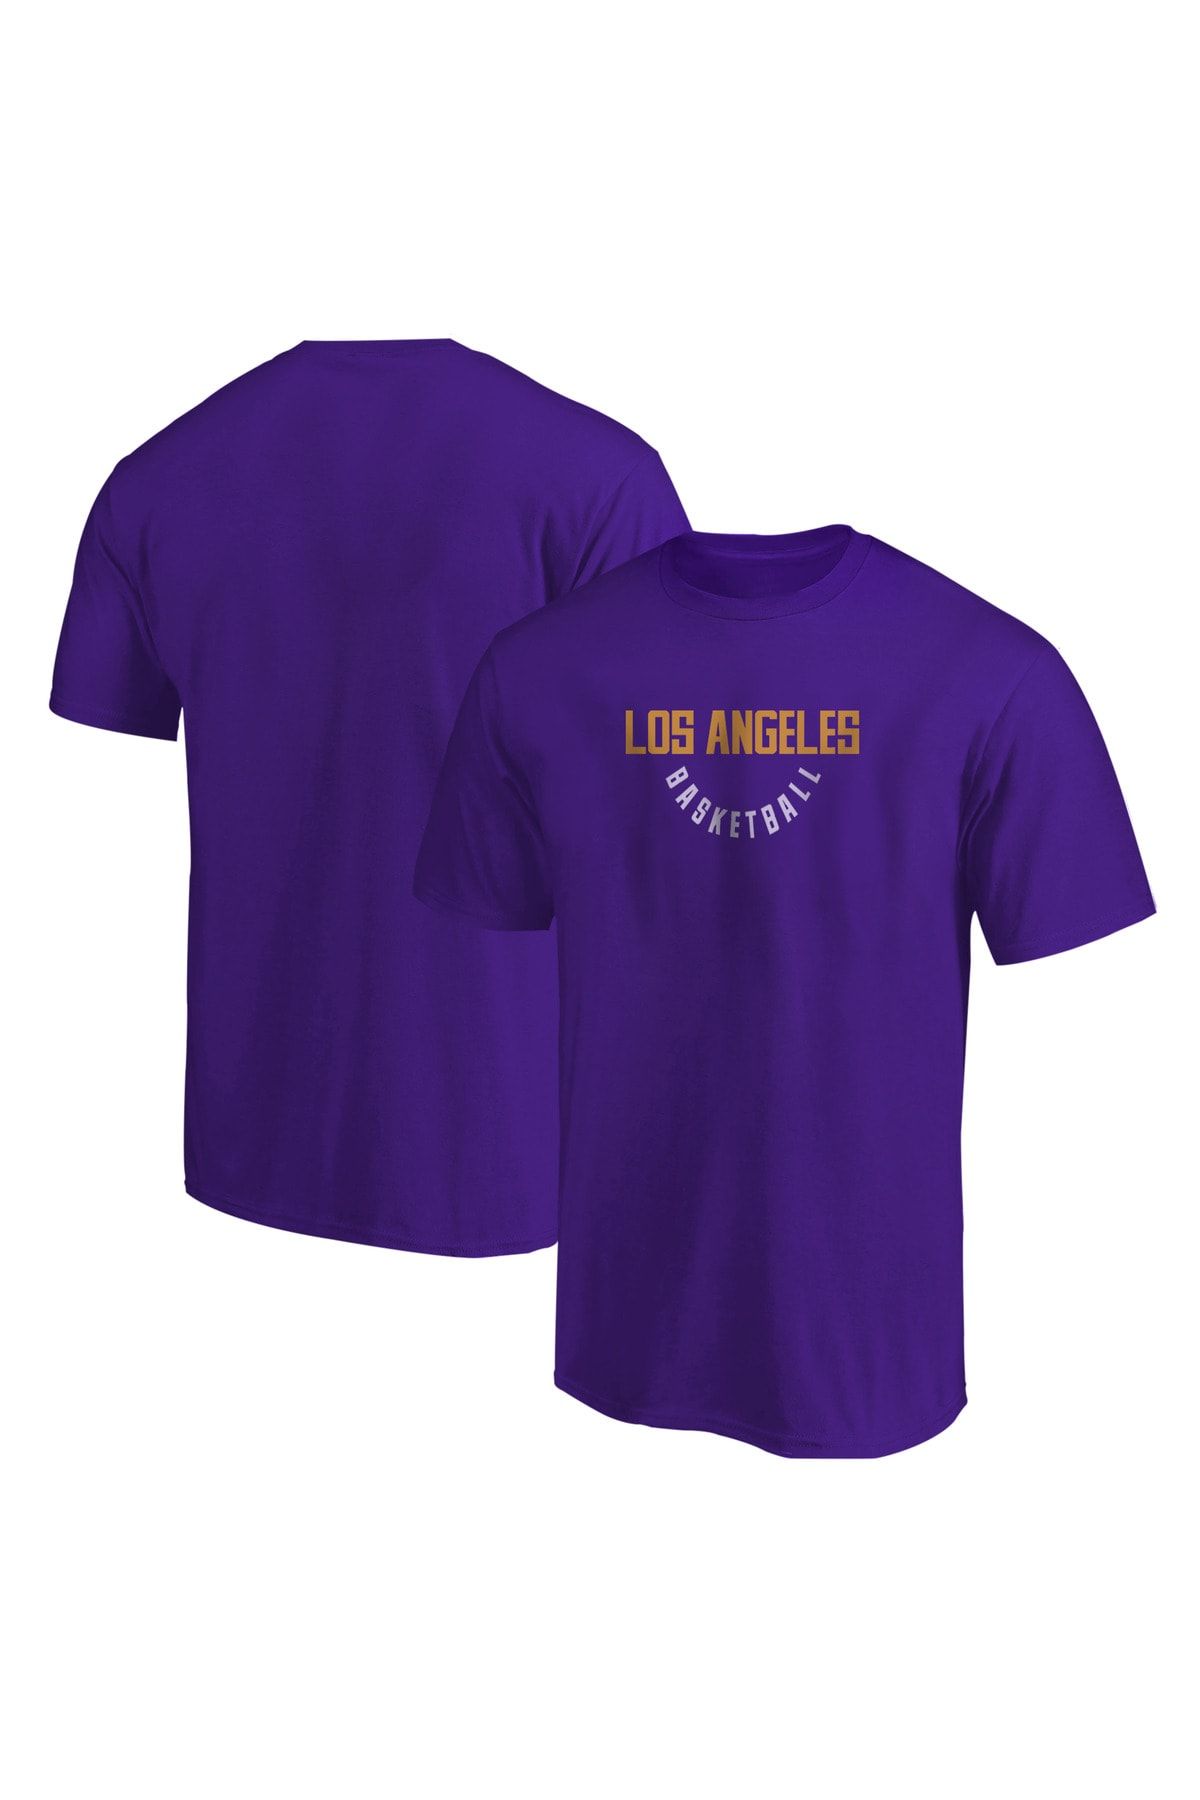 Usateamfans Los Angeles Basketball Tshirt